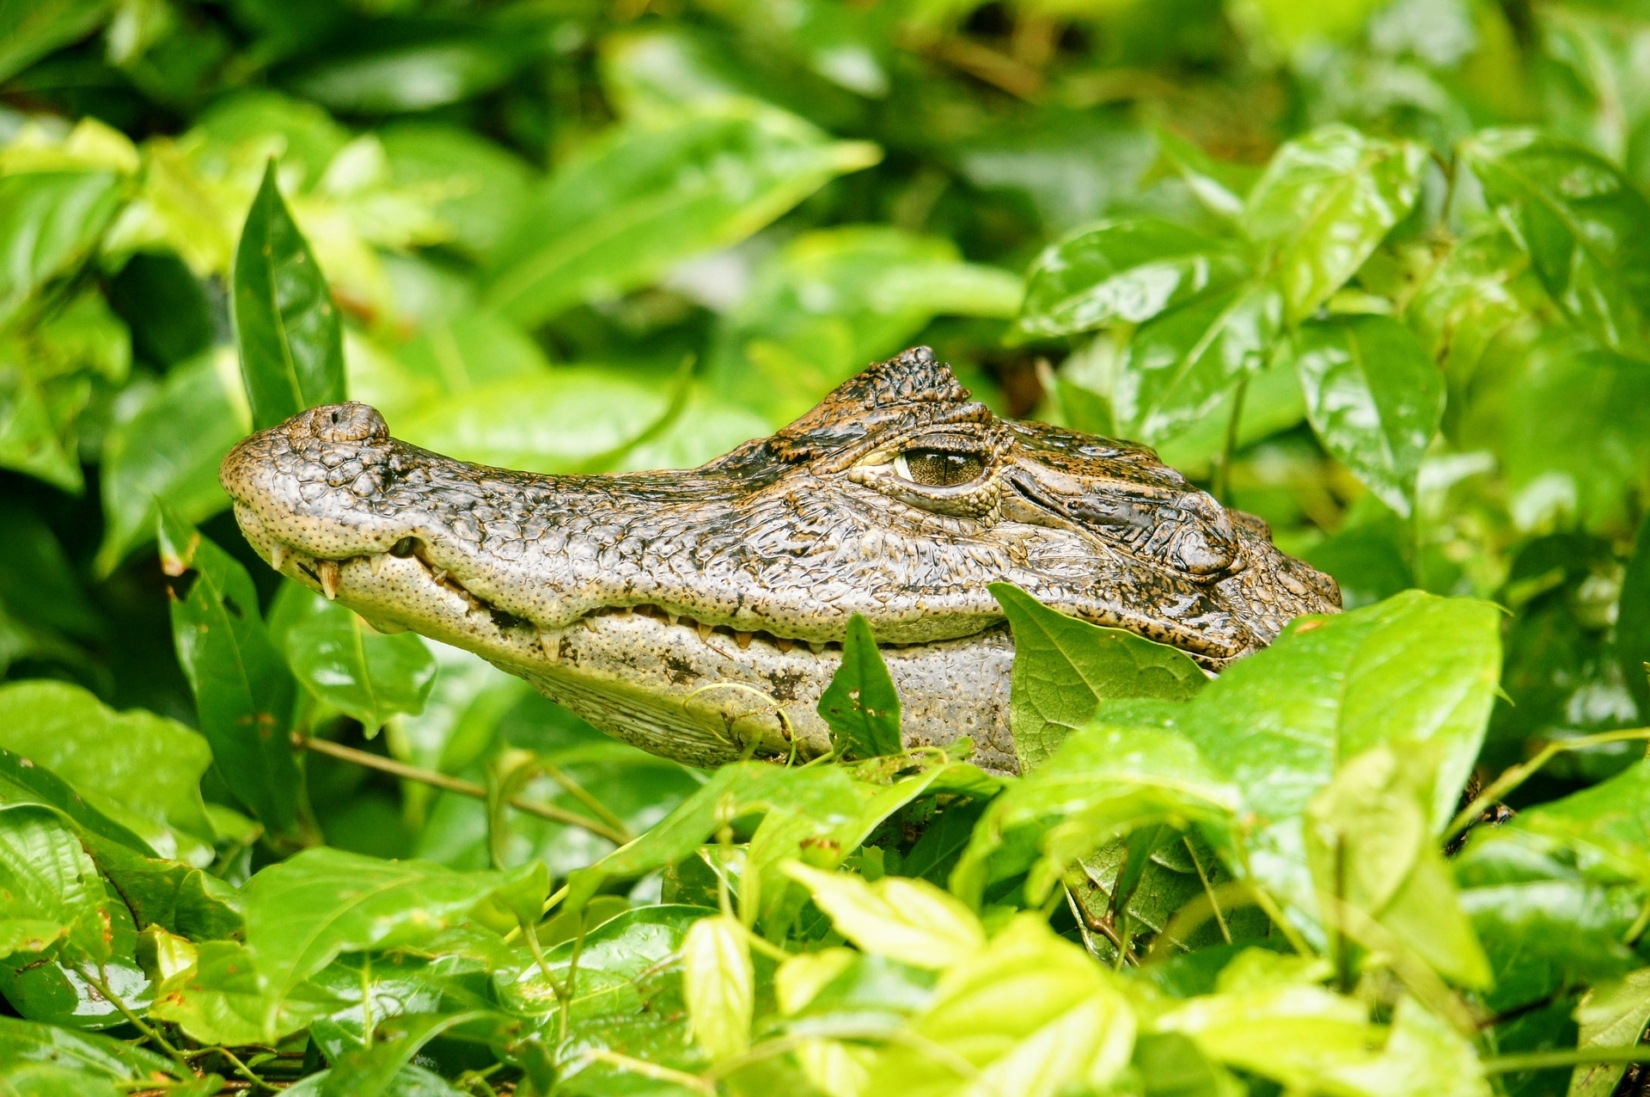 Caiman alligator poking its head above river foliage